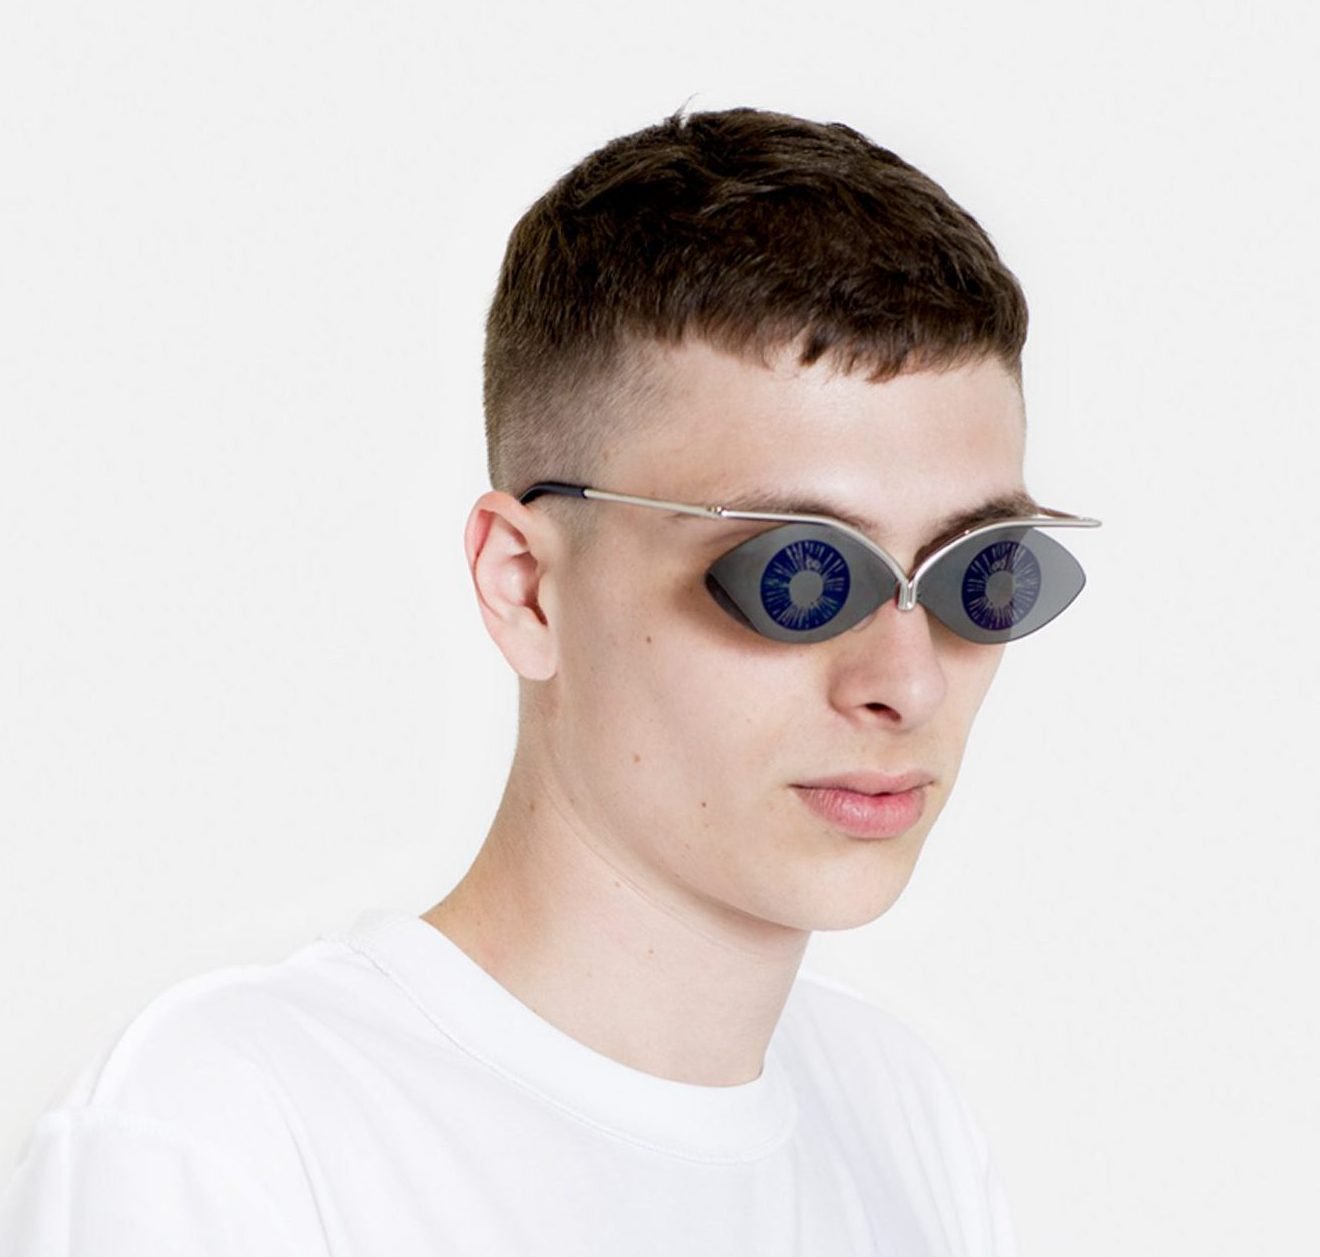 futurystyczne okulary